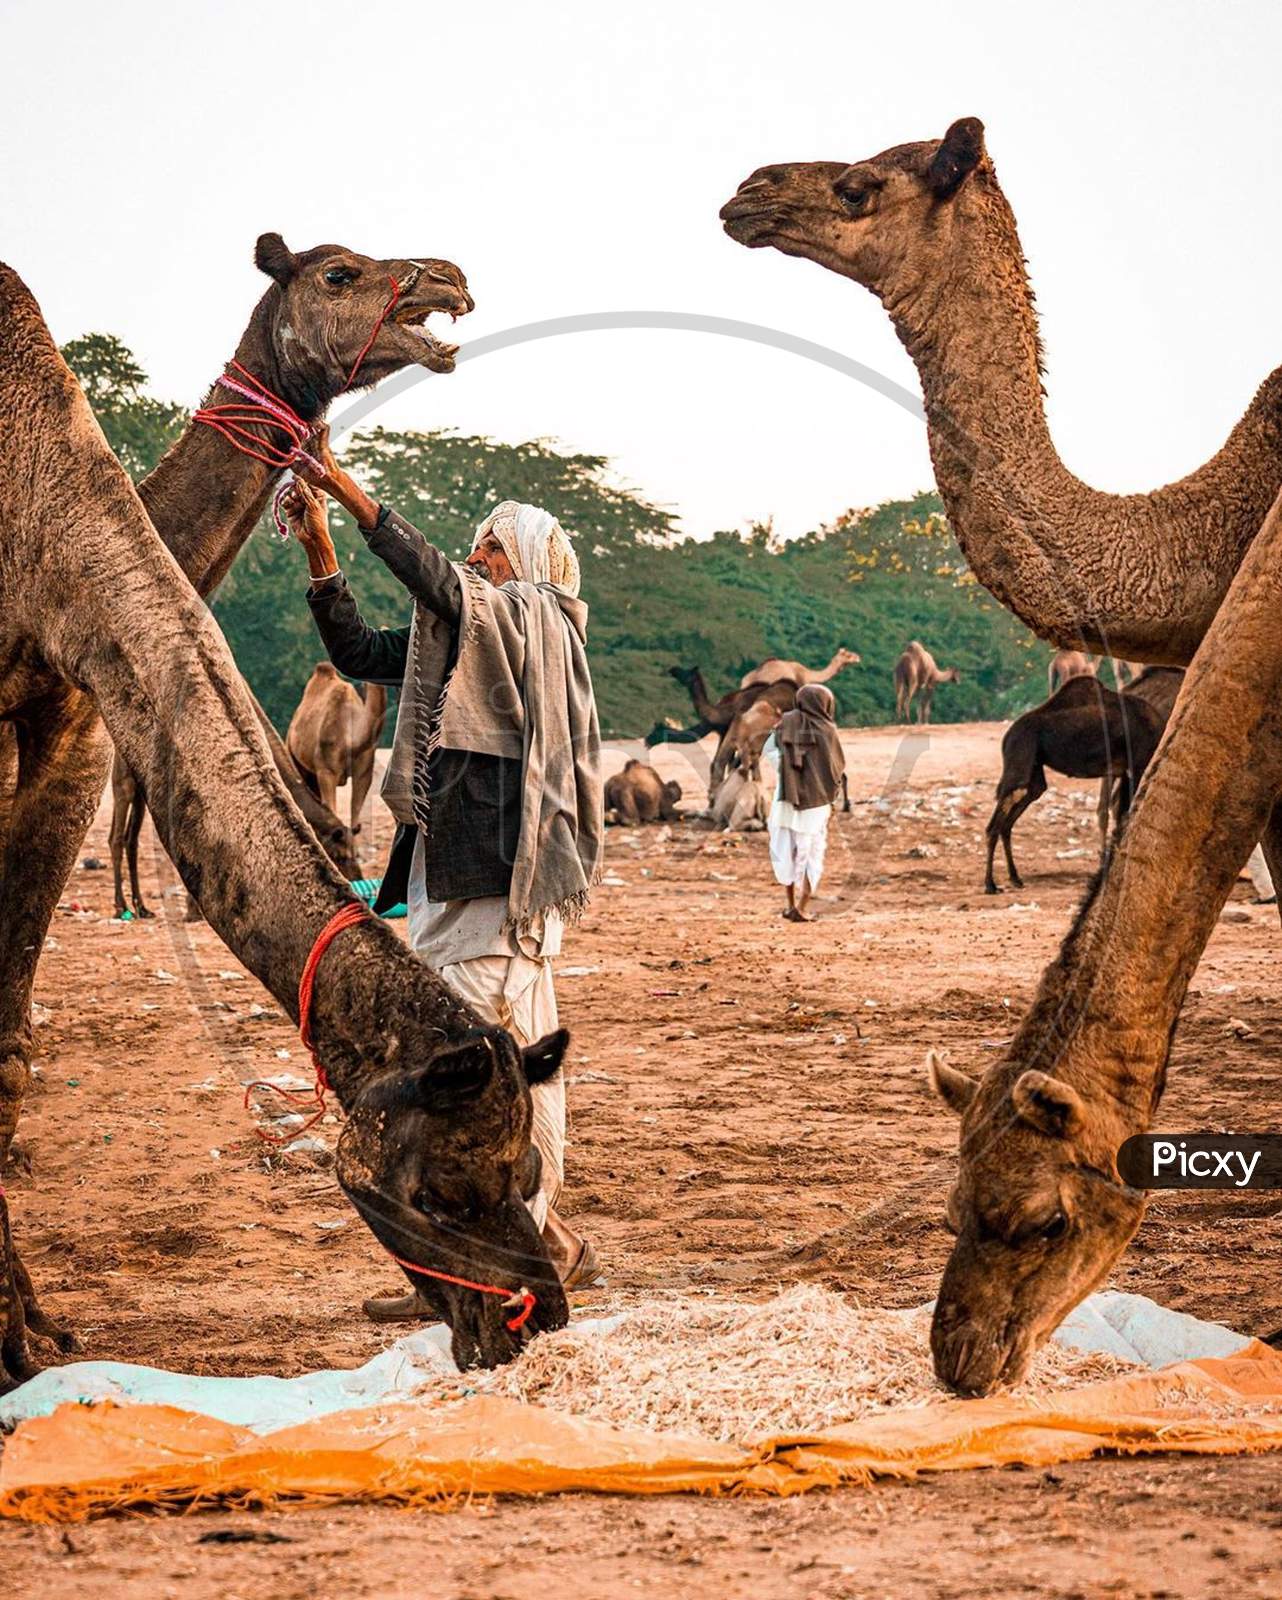 Rajasthani camel